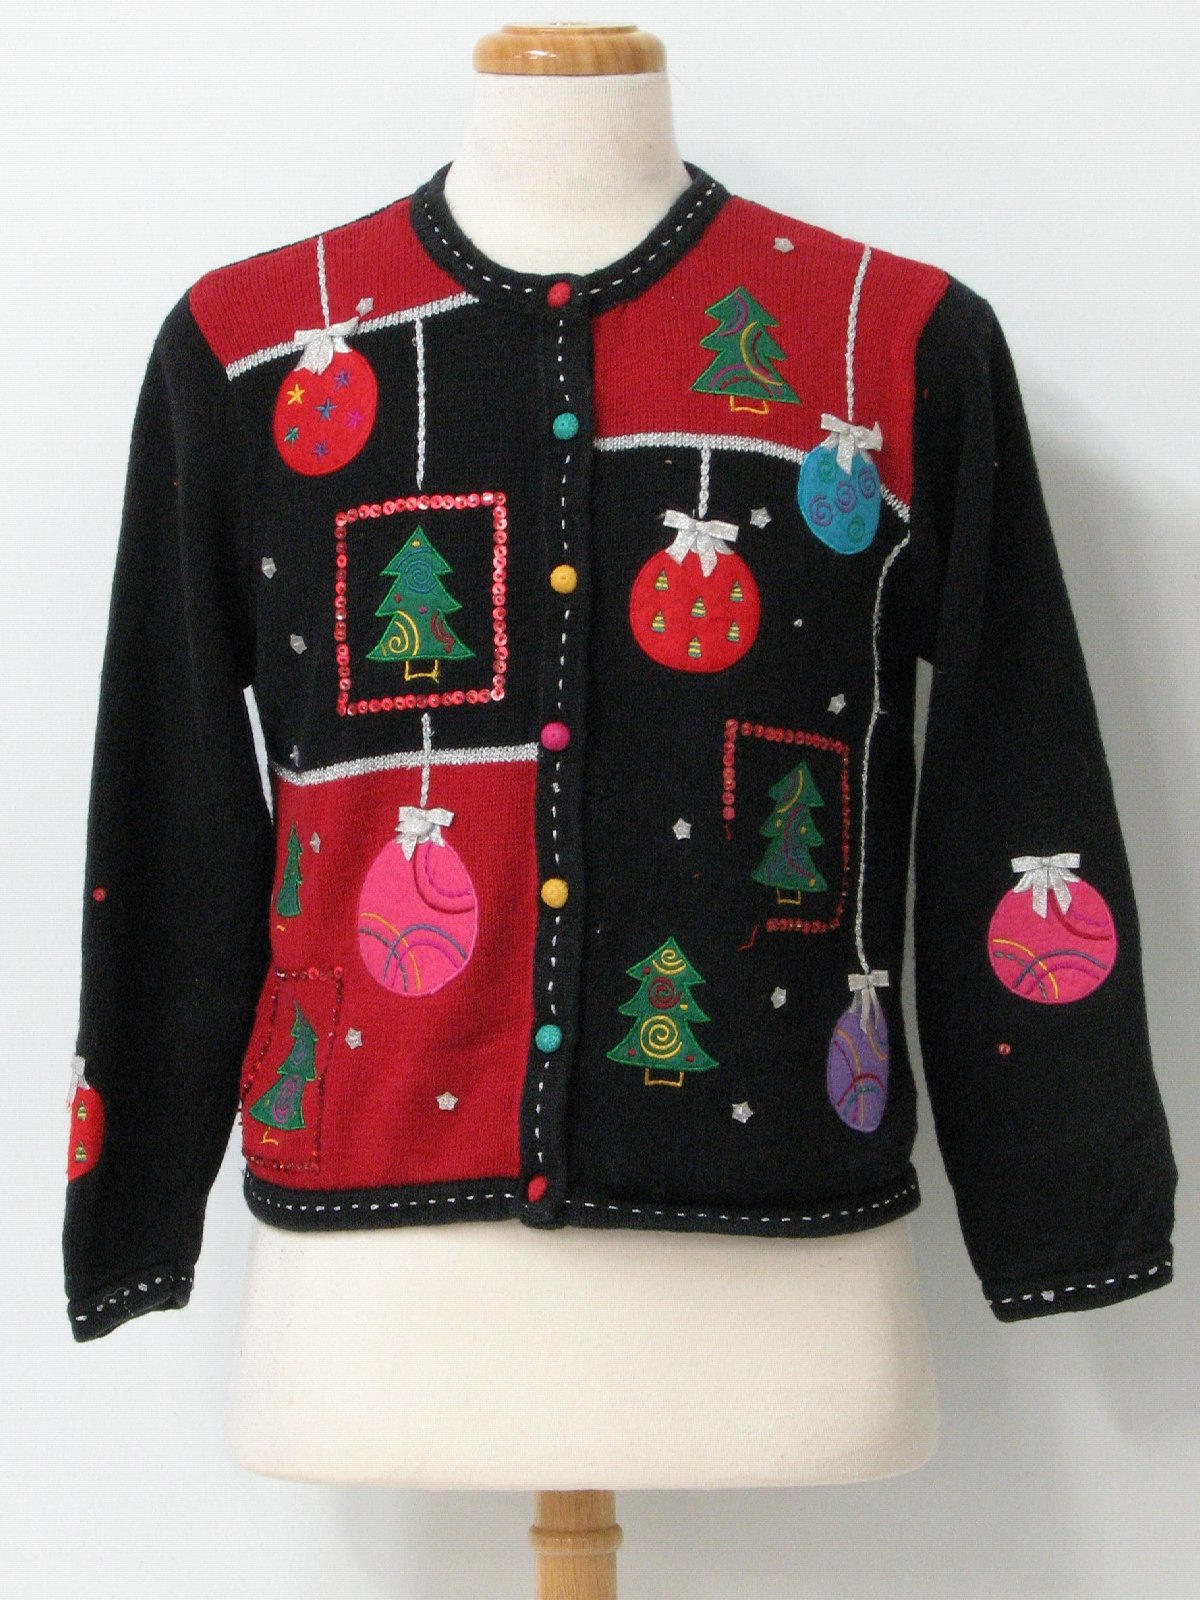 Womens Ugly Christmas Sweater: -Karen Scott- Womens black background ...